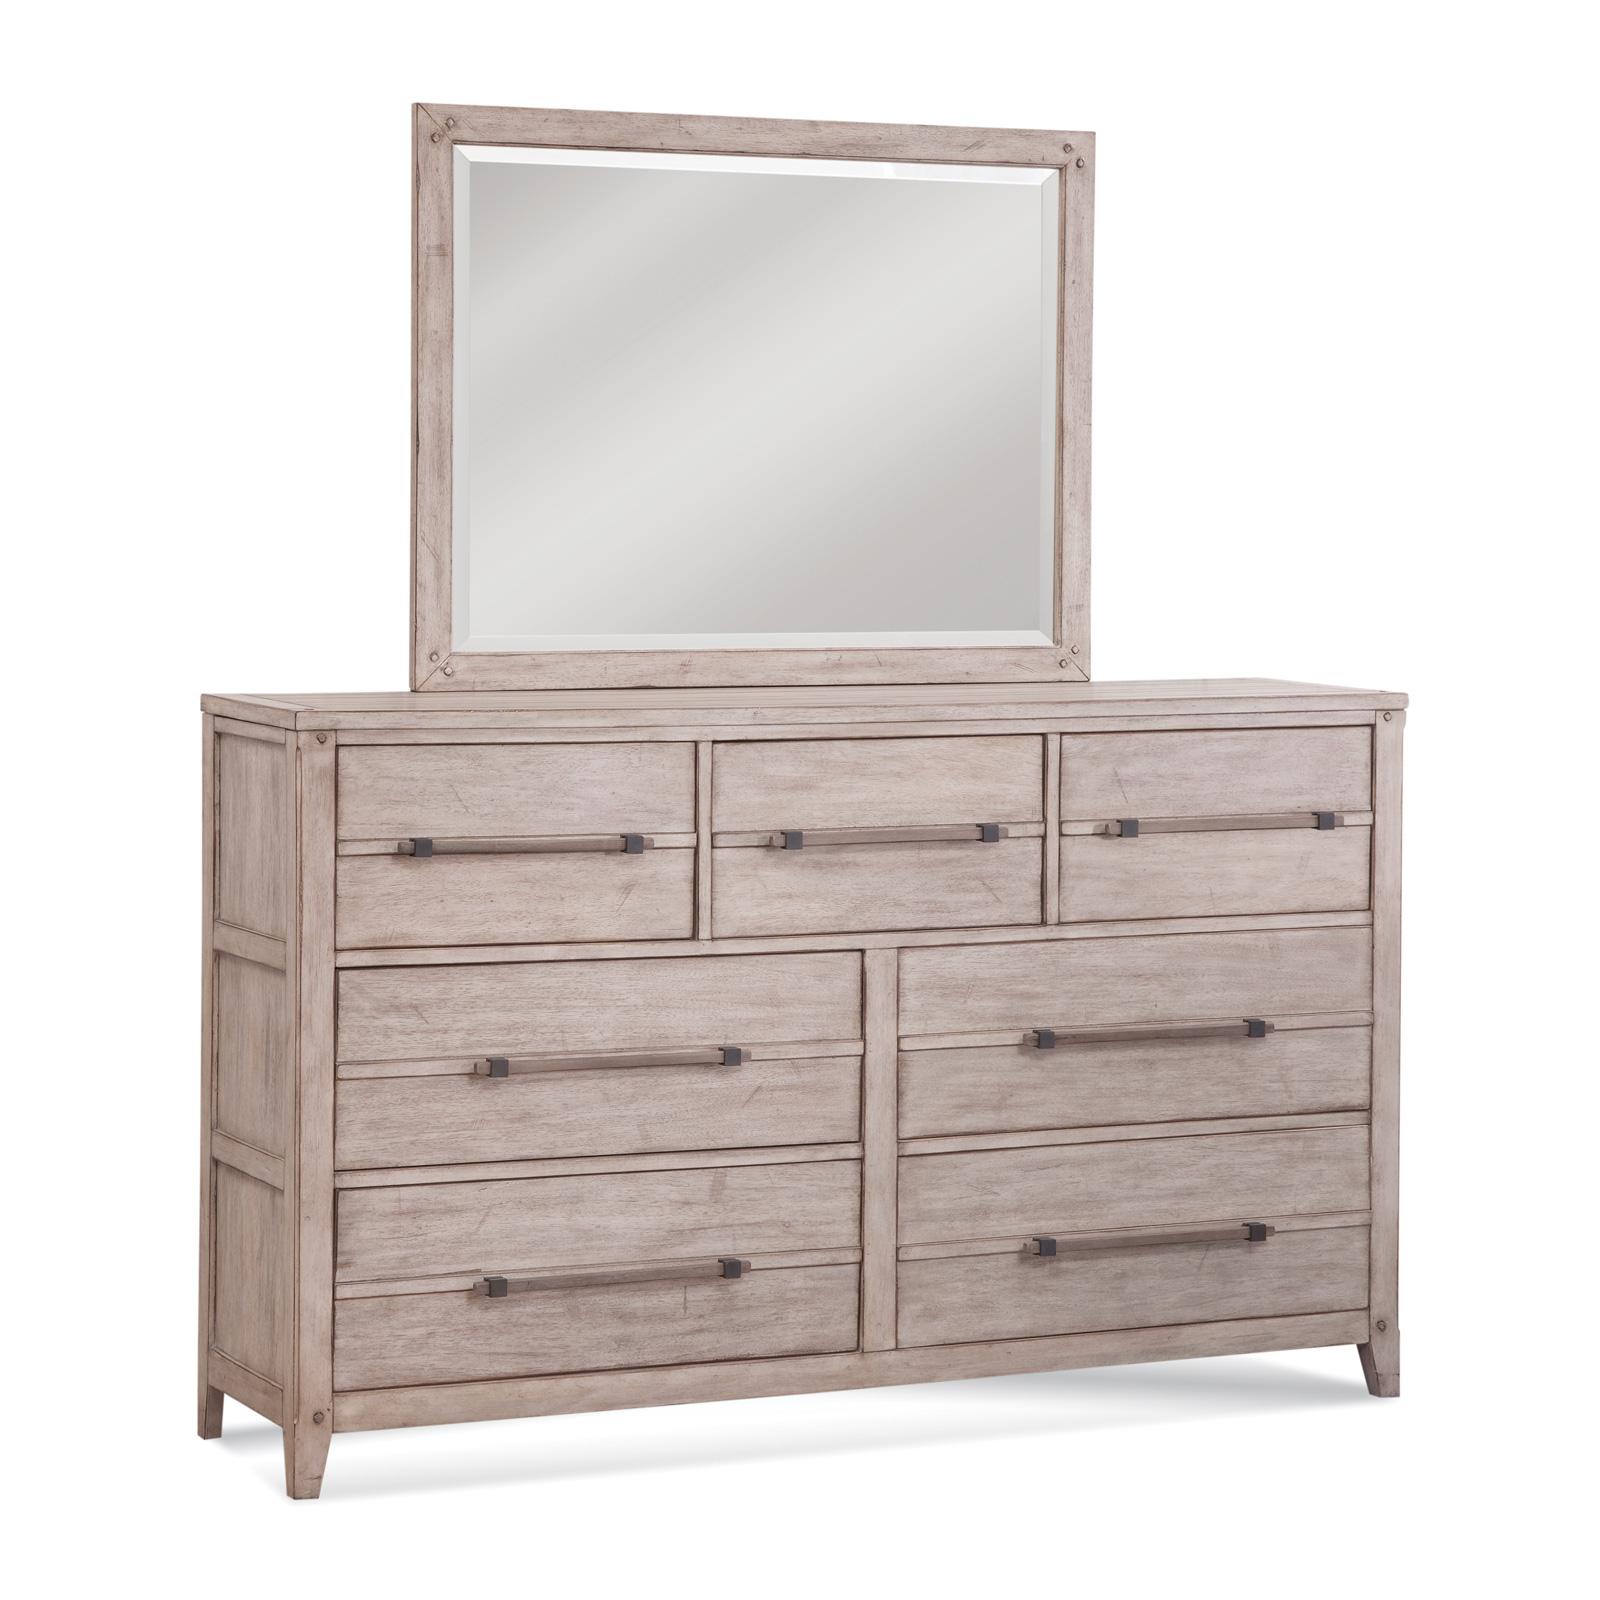 Classic, Traditional Dresser With Mirror AURORA 2810-TDLM 2810-TDLM in whitewash 